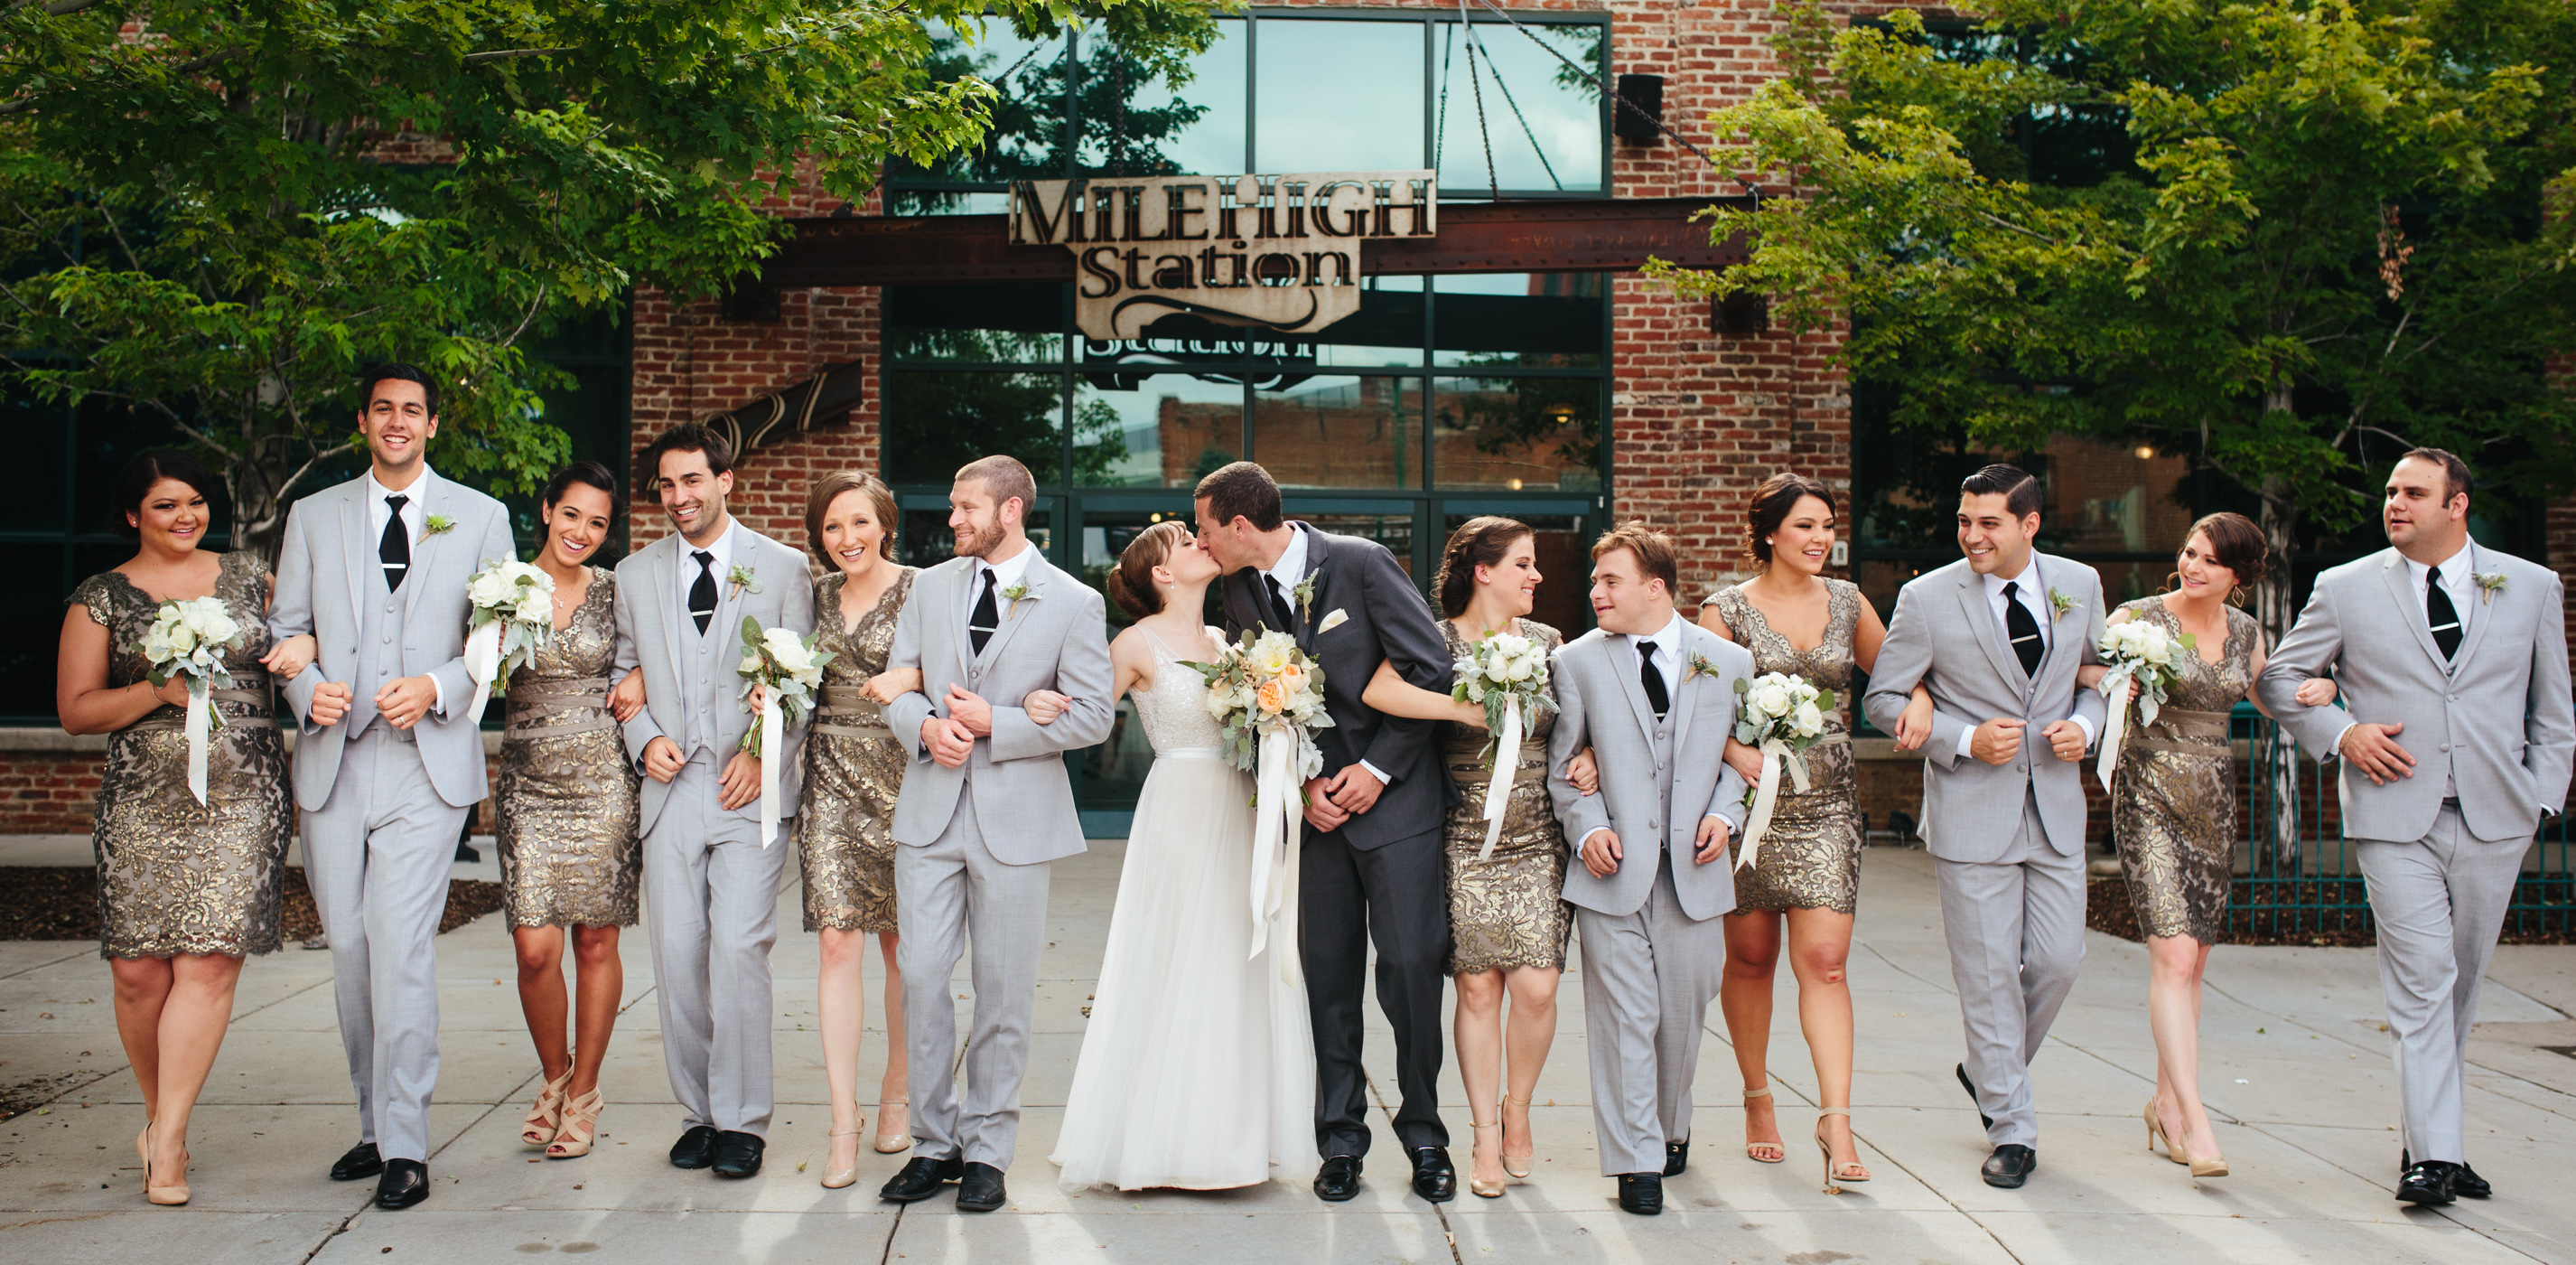 kellylemonphotography_a downtown denver Jewish wedding at Mile High station Photos-49